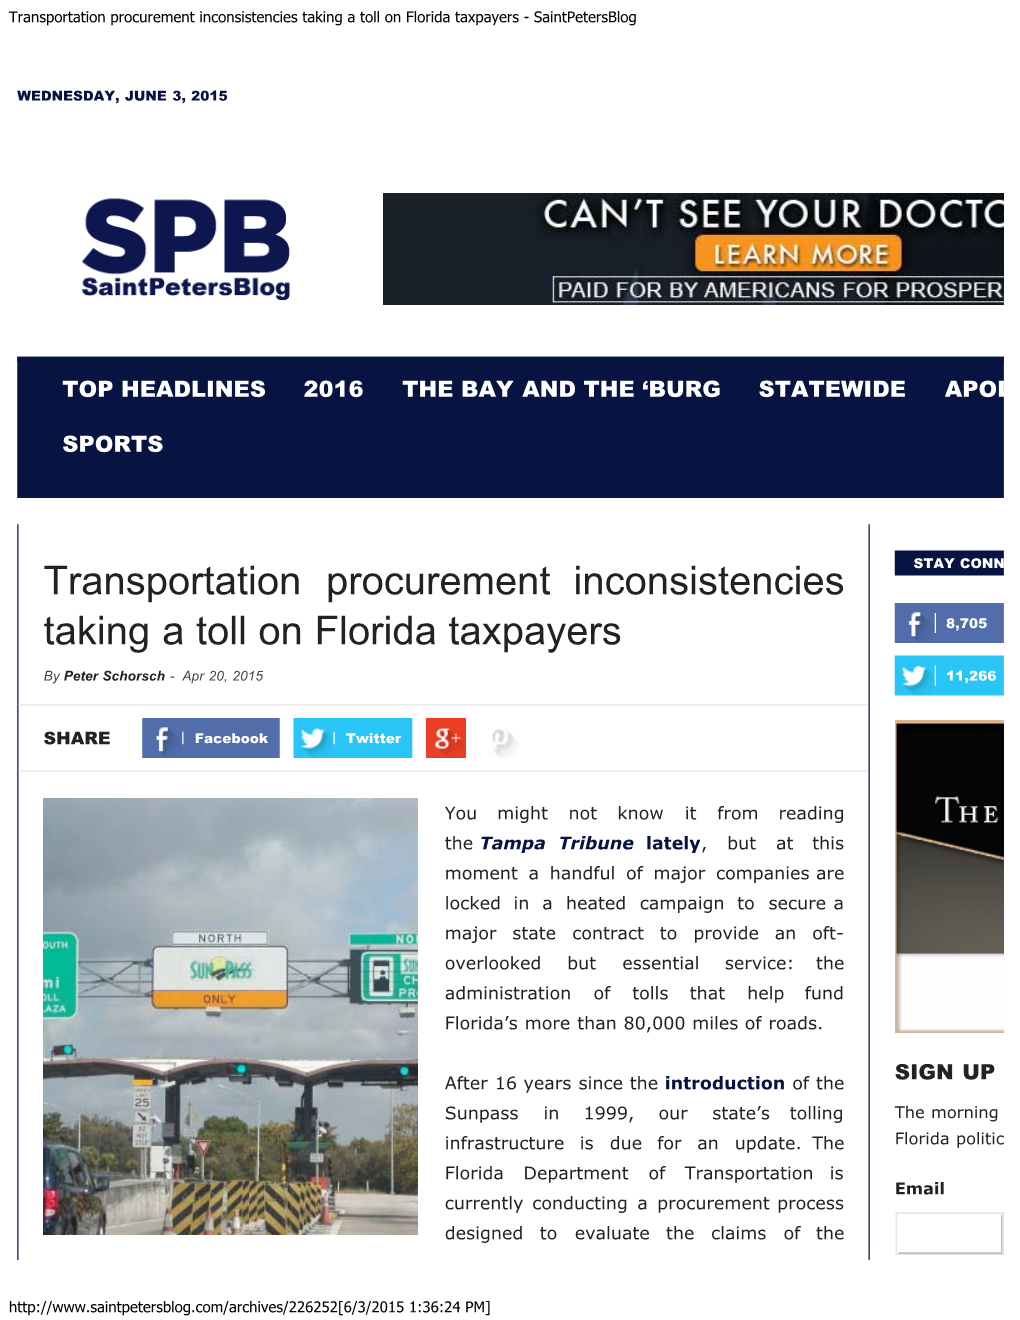 Transportation Procurement Inconsistencies Taking a Toll on Florida Taxpayers - Saintpetersblog